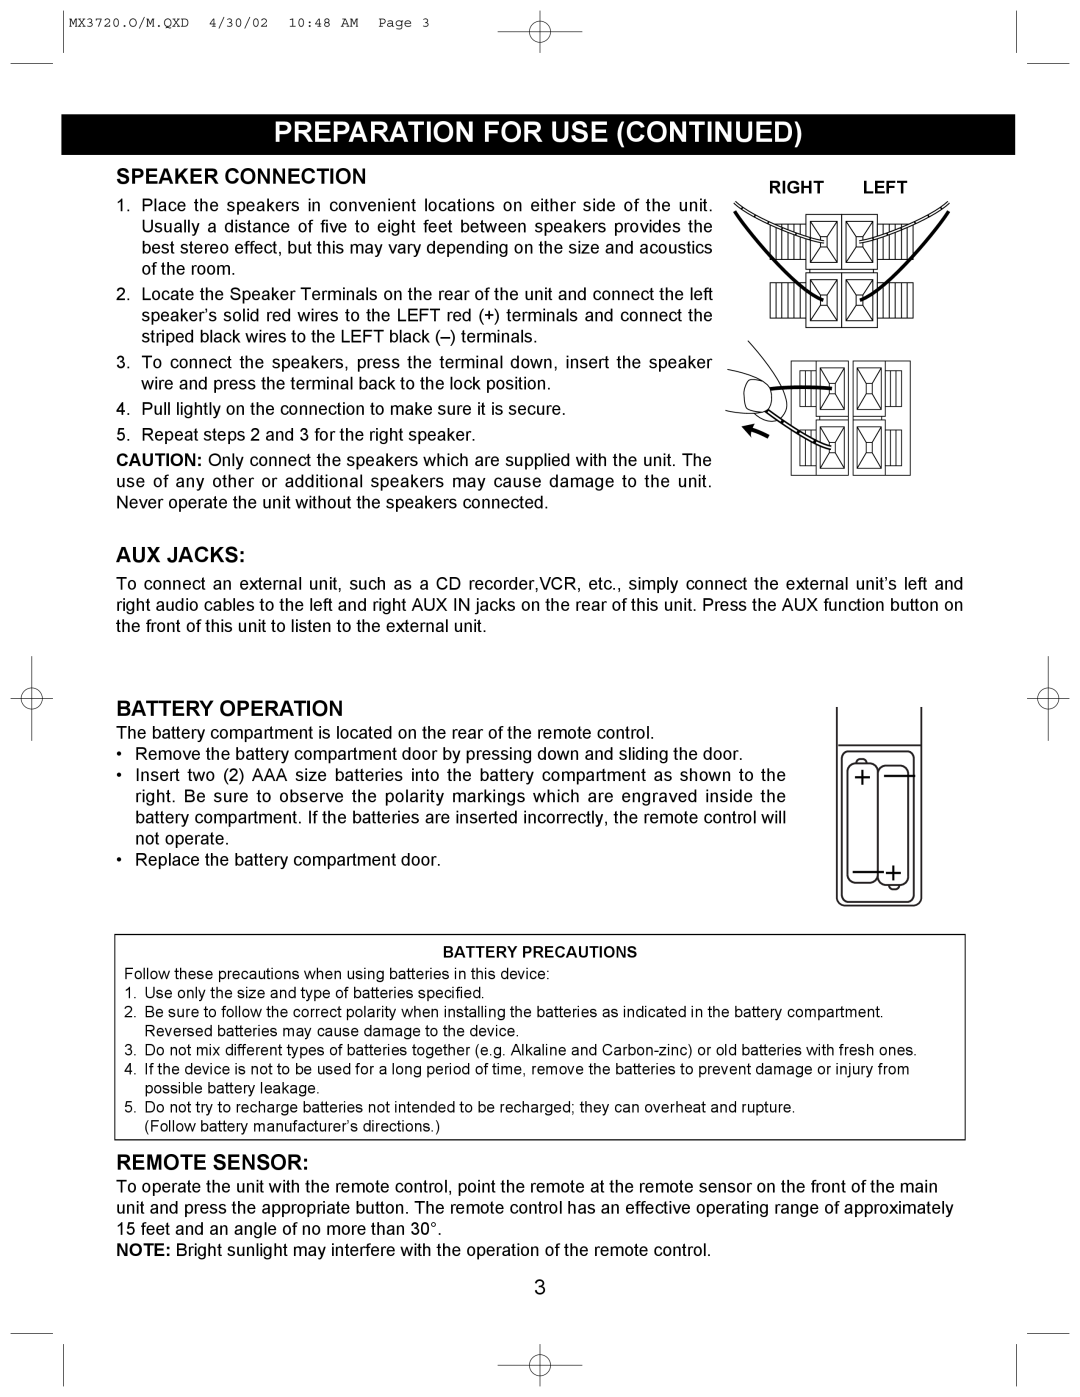 Memorex MX3720 manual Preparation For Use Continued, Speaker Connection, Aux Jacks, Battery Operation, Remote Sensor, +- -+ 